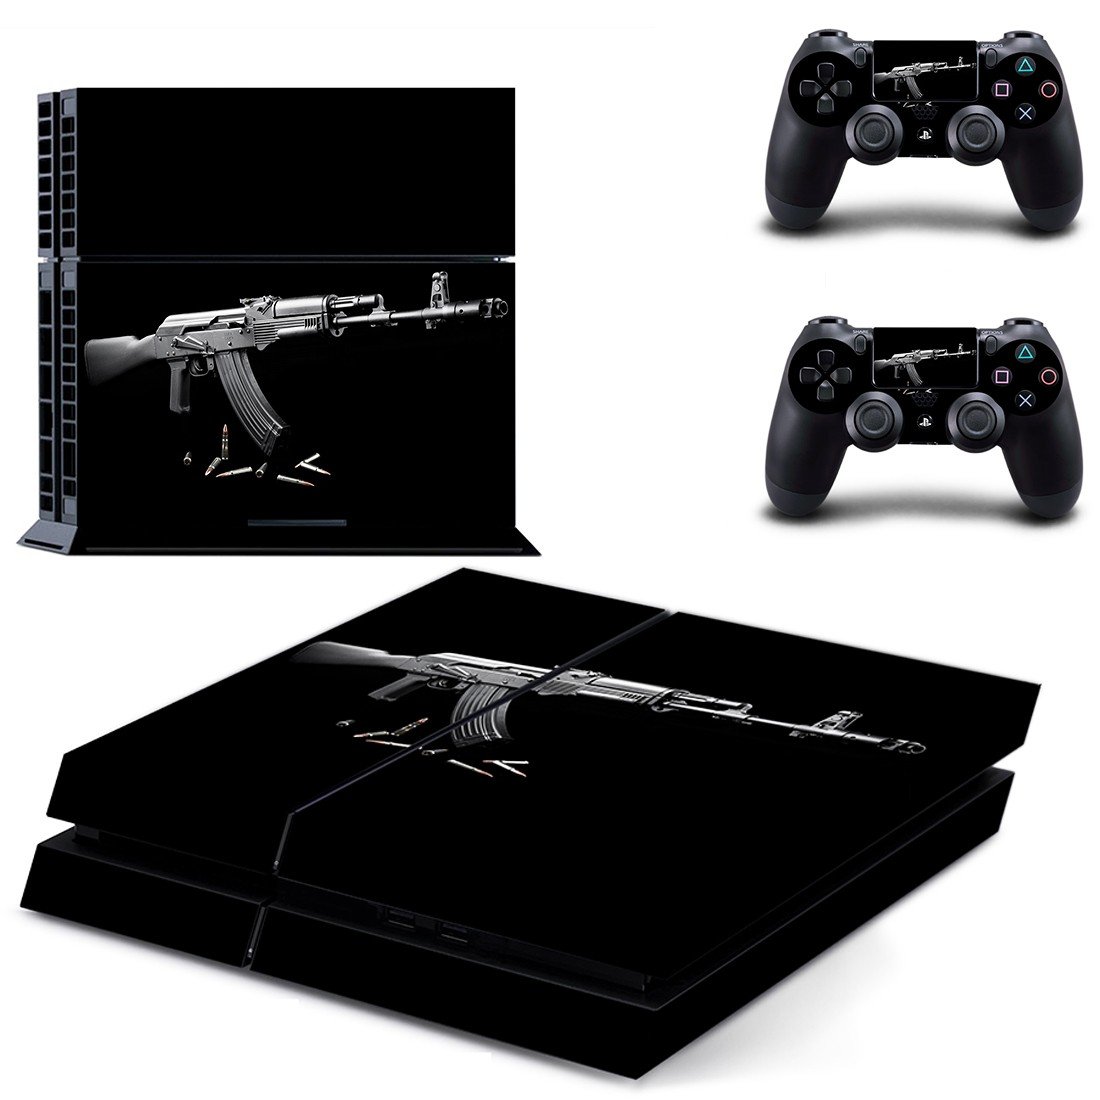 PlayStation 4 And Controllers Skin Sticker - AKM Gun